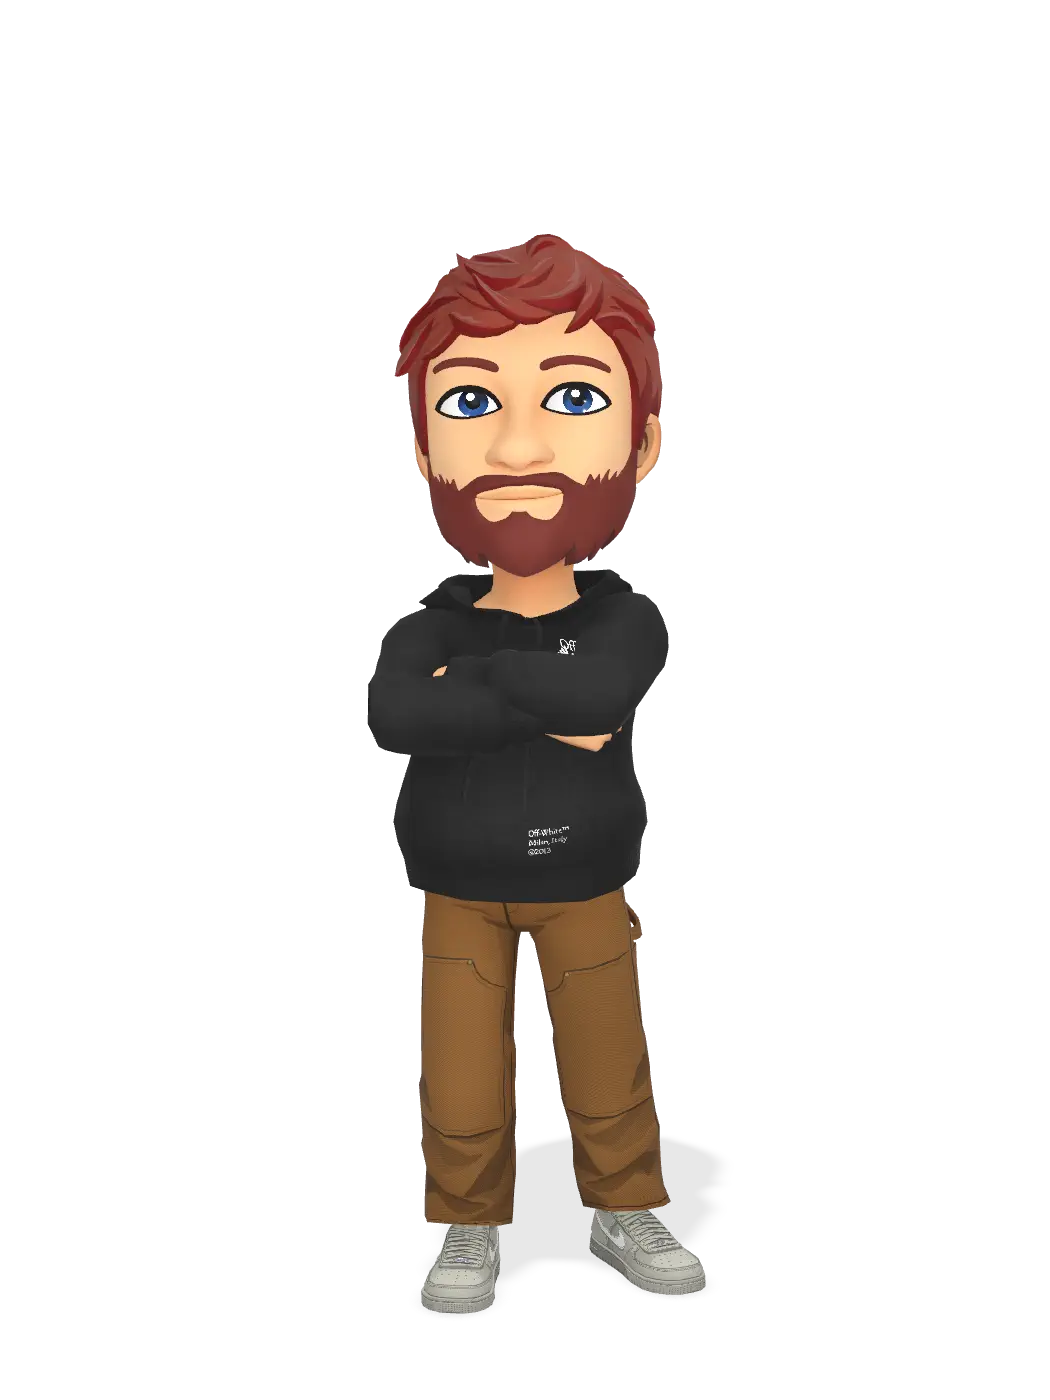 3D Bitmoji for jootnnn avatar